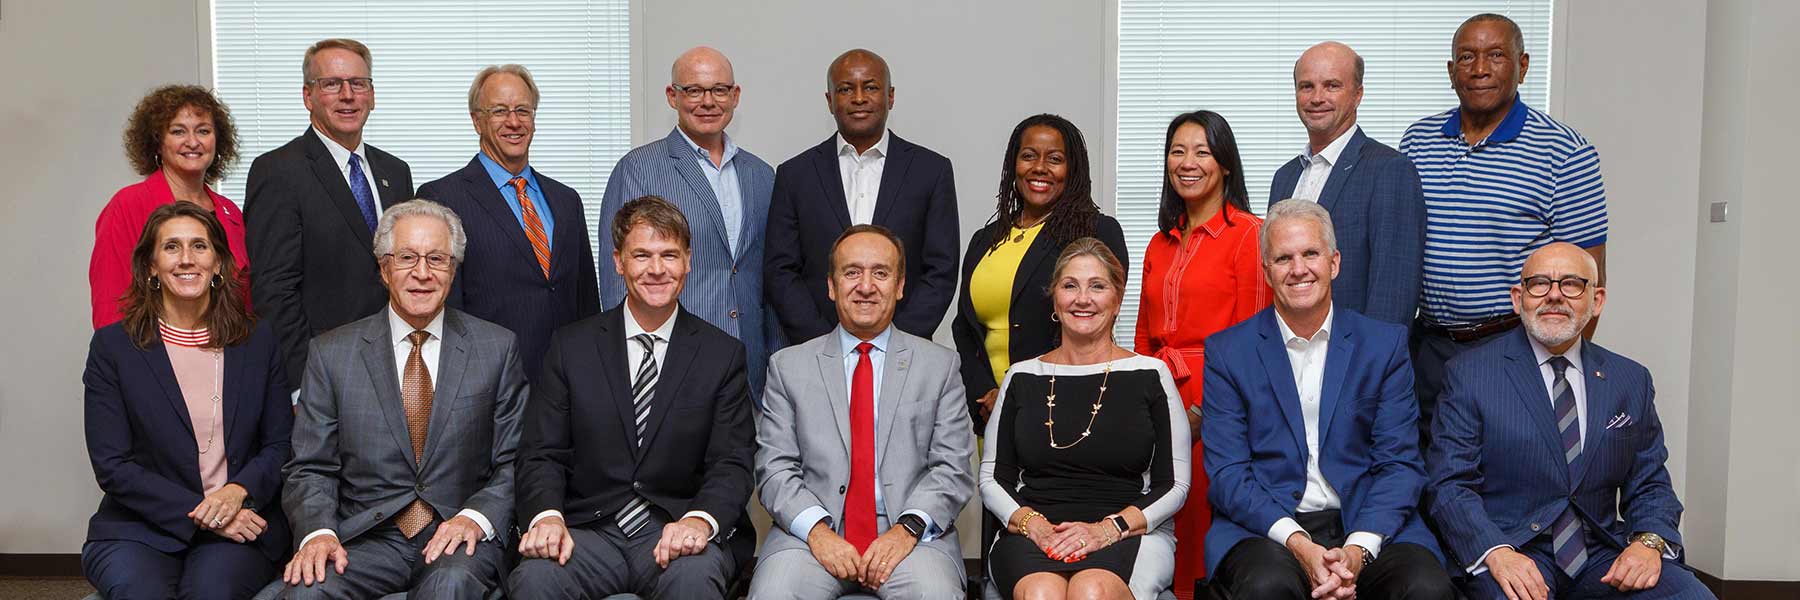 Members of the 2019-2020 IUPUI Board of Advisors.